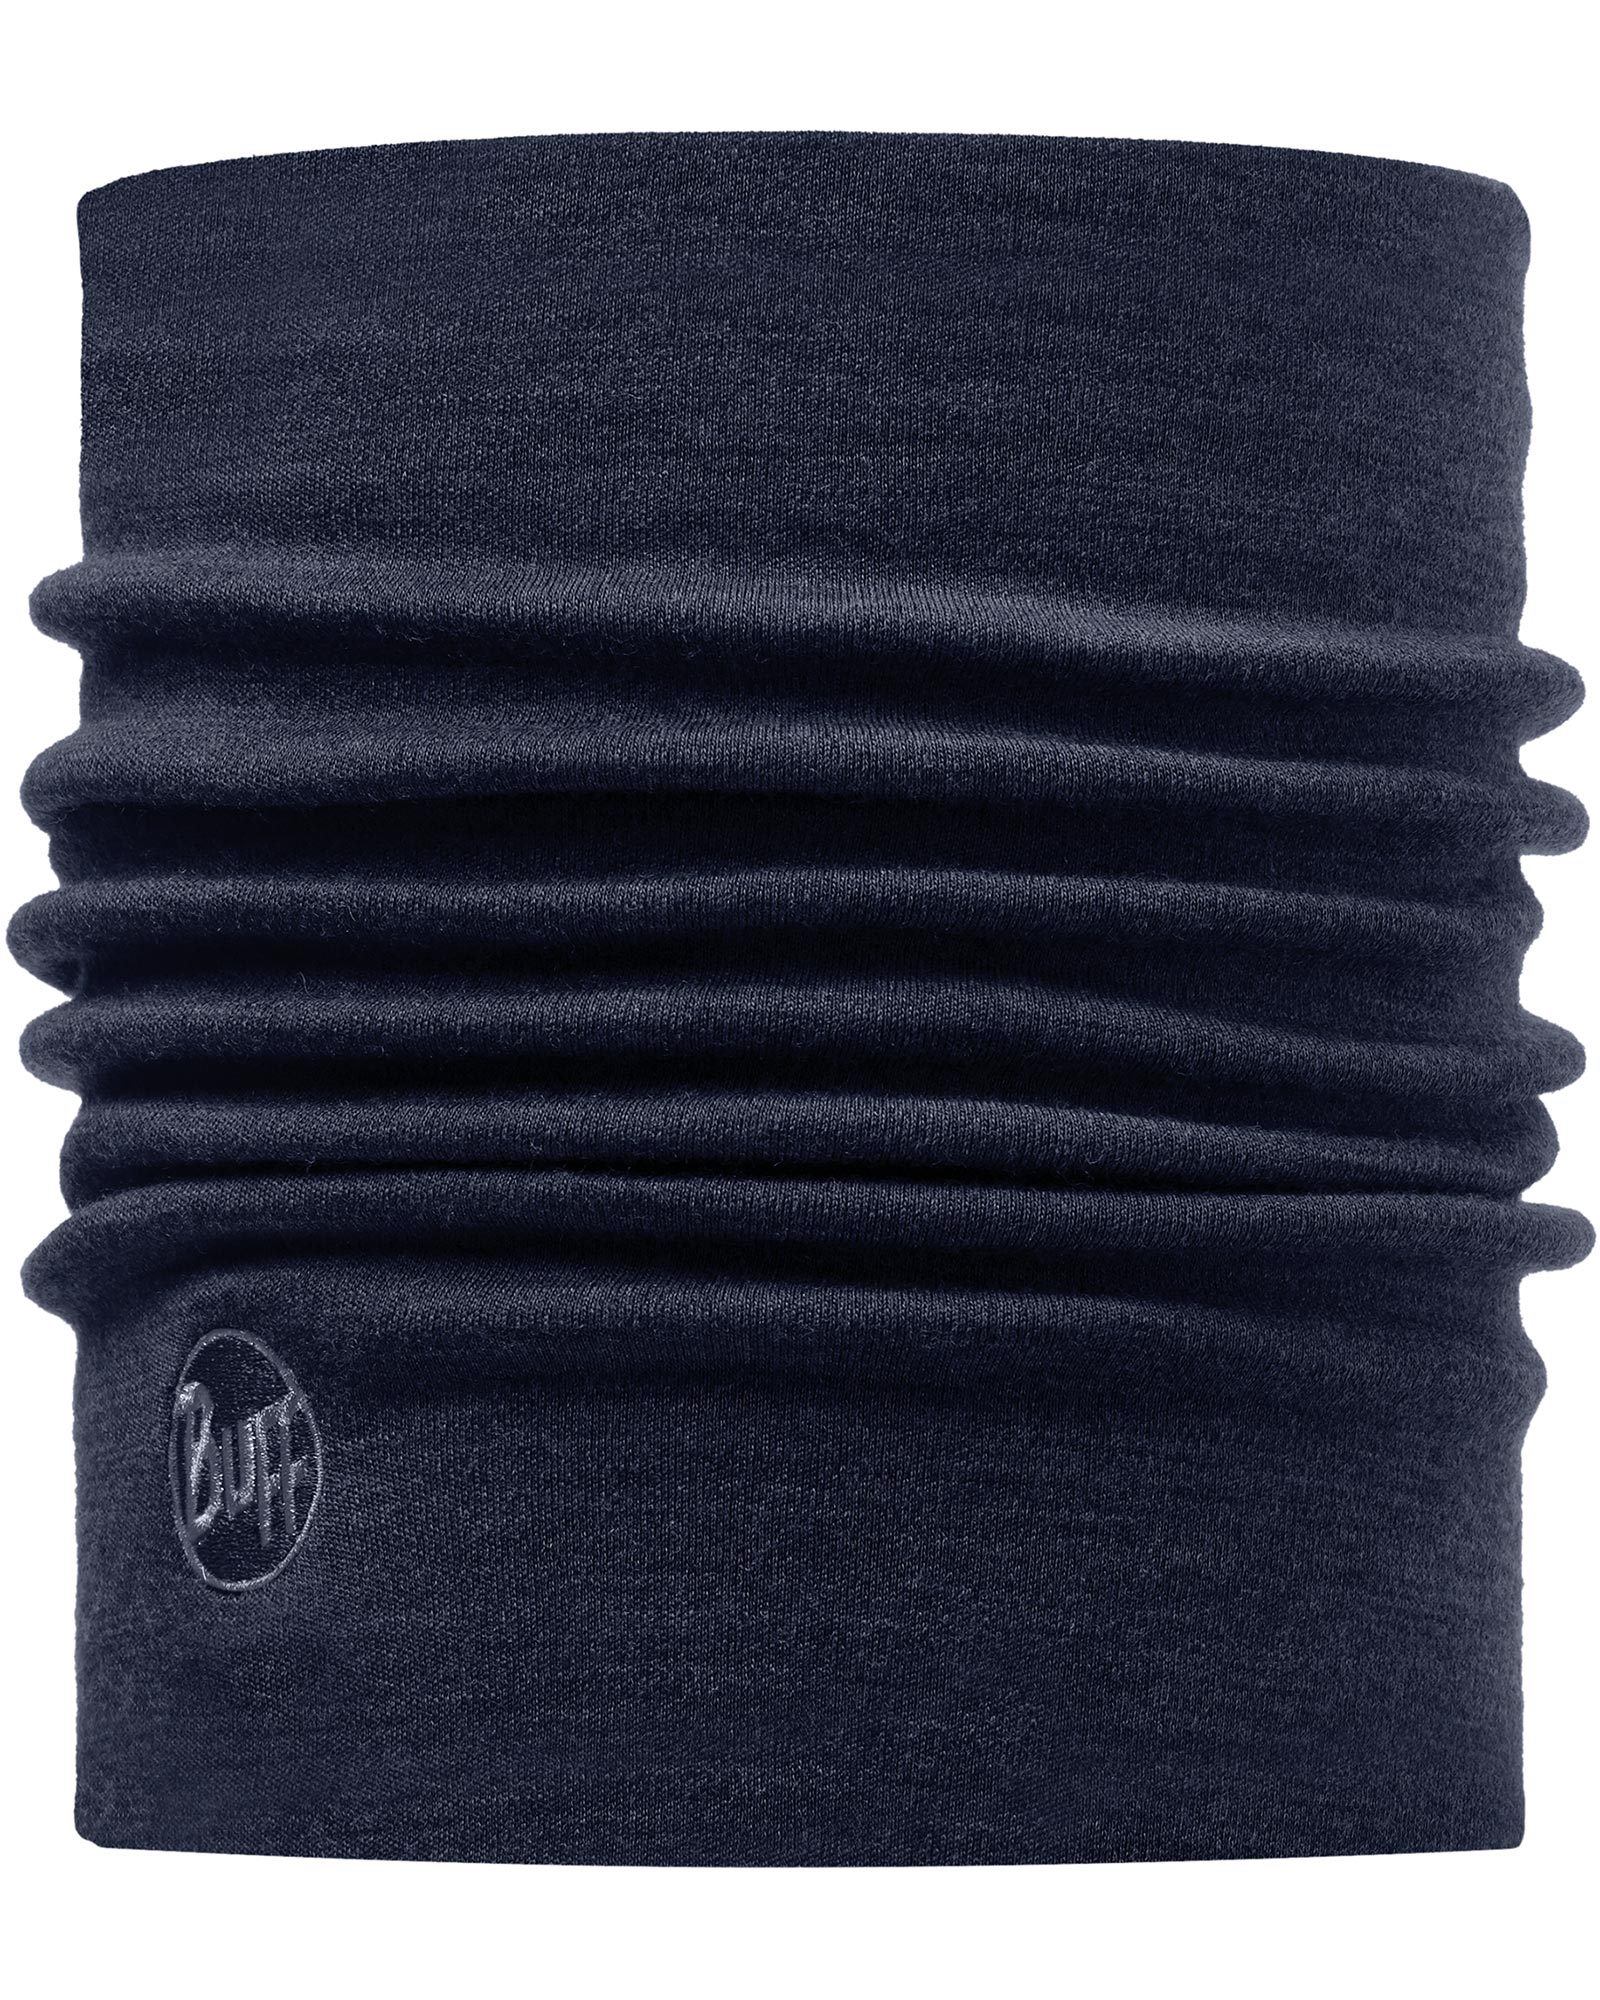 Buff Unisex Heavyweight Merino Wool Tubular Neck Gaiter - Solid Denim